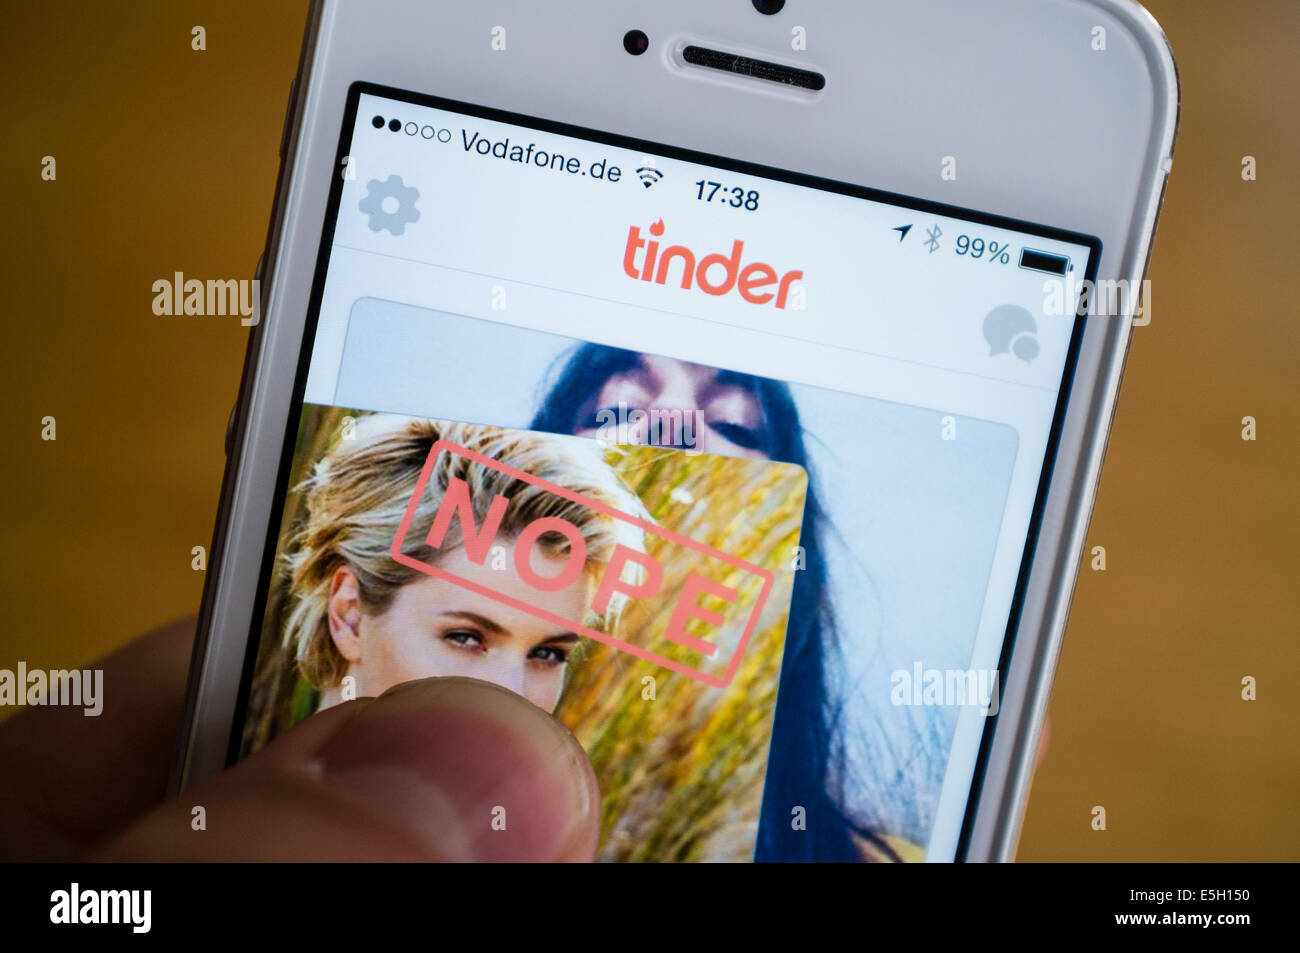 Yesca online dating app en el iPhone teléfonos inteligentes. Foto de stock